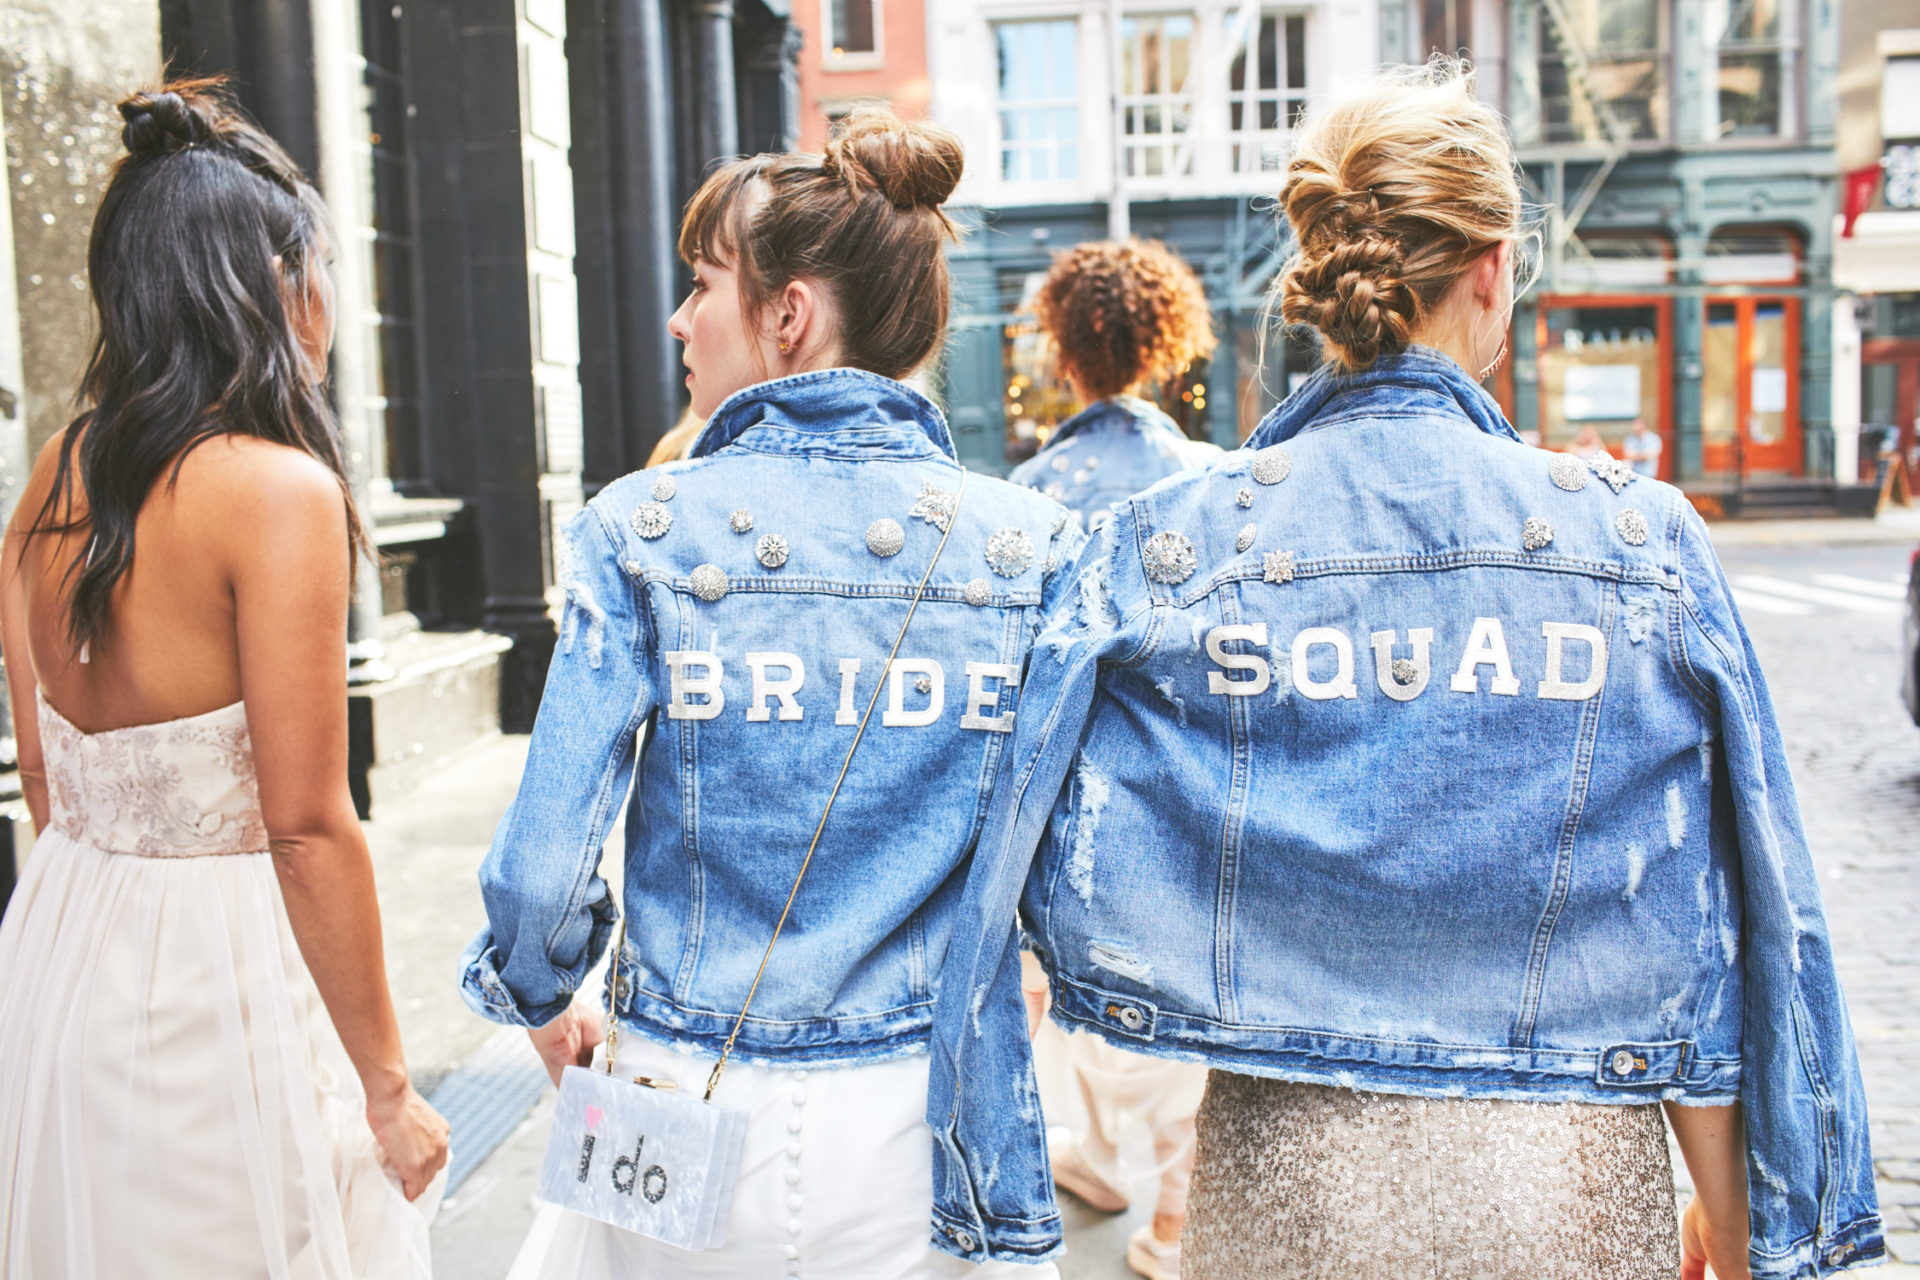 A bridal wedding party walk down the street wearing denim jackets